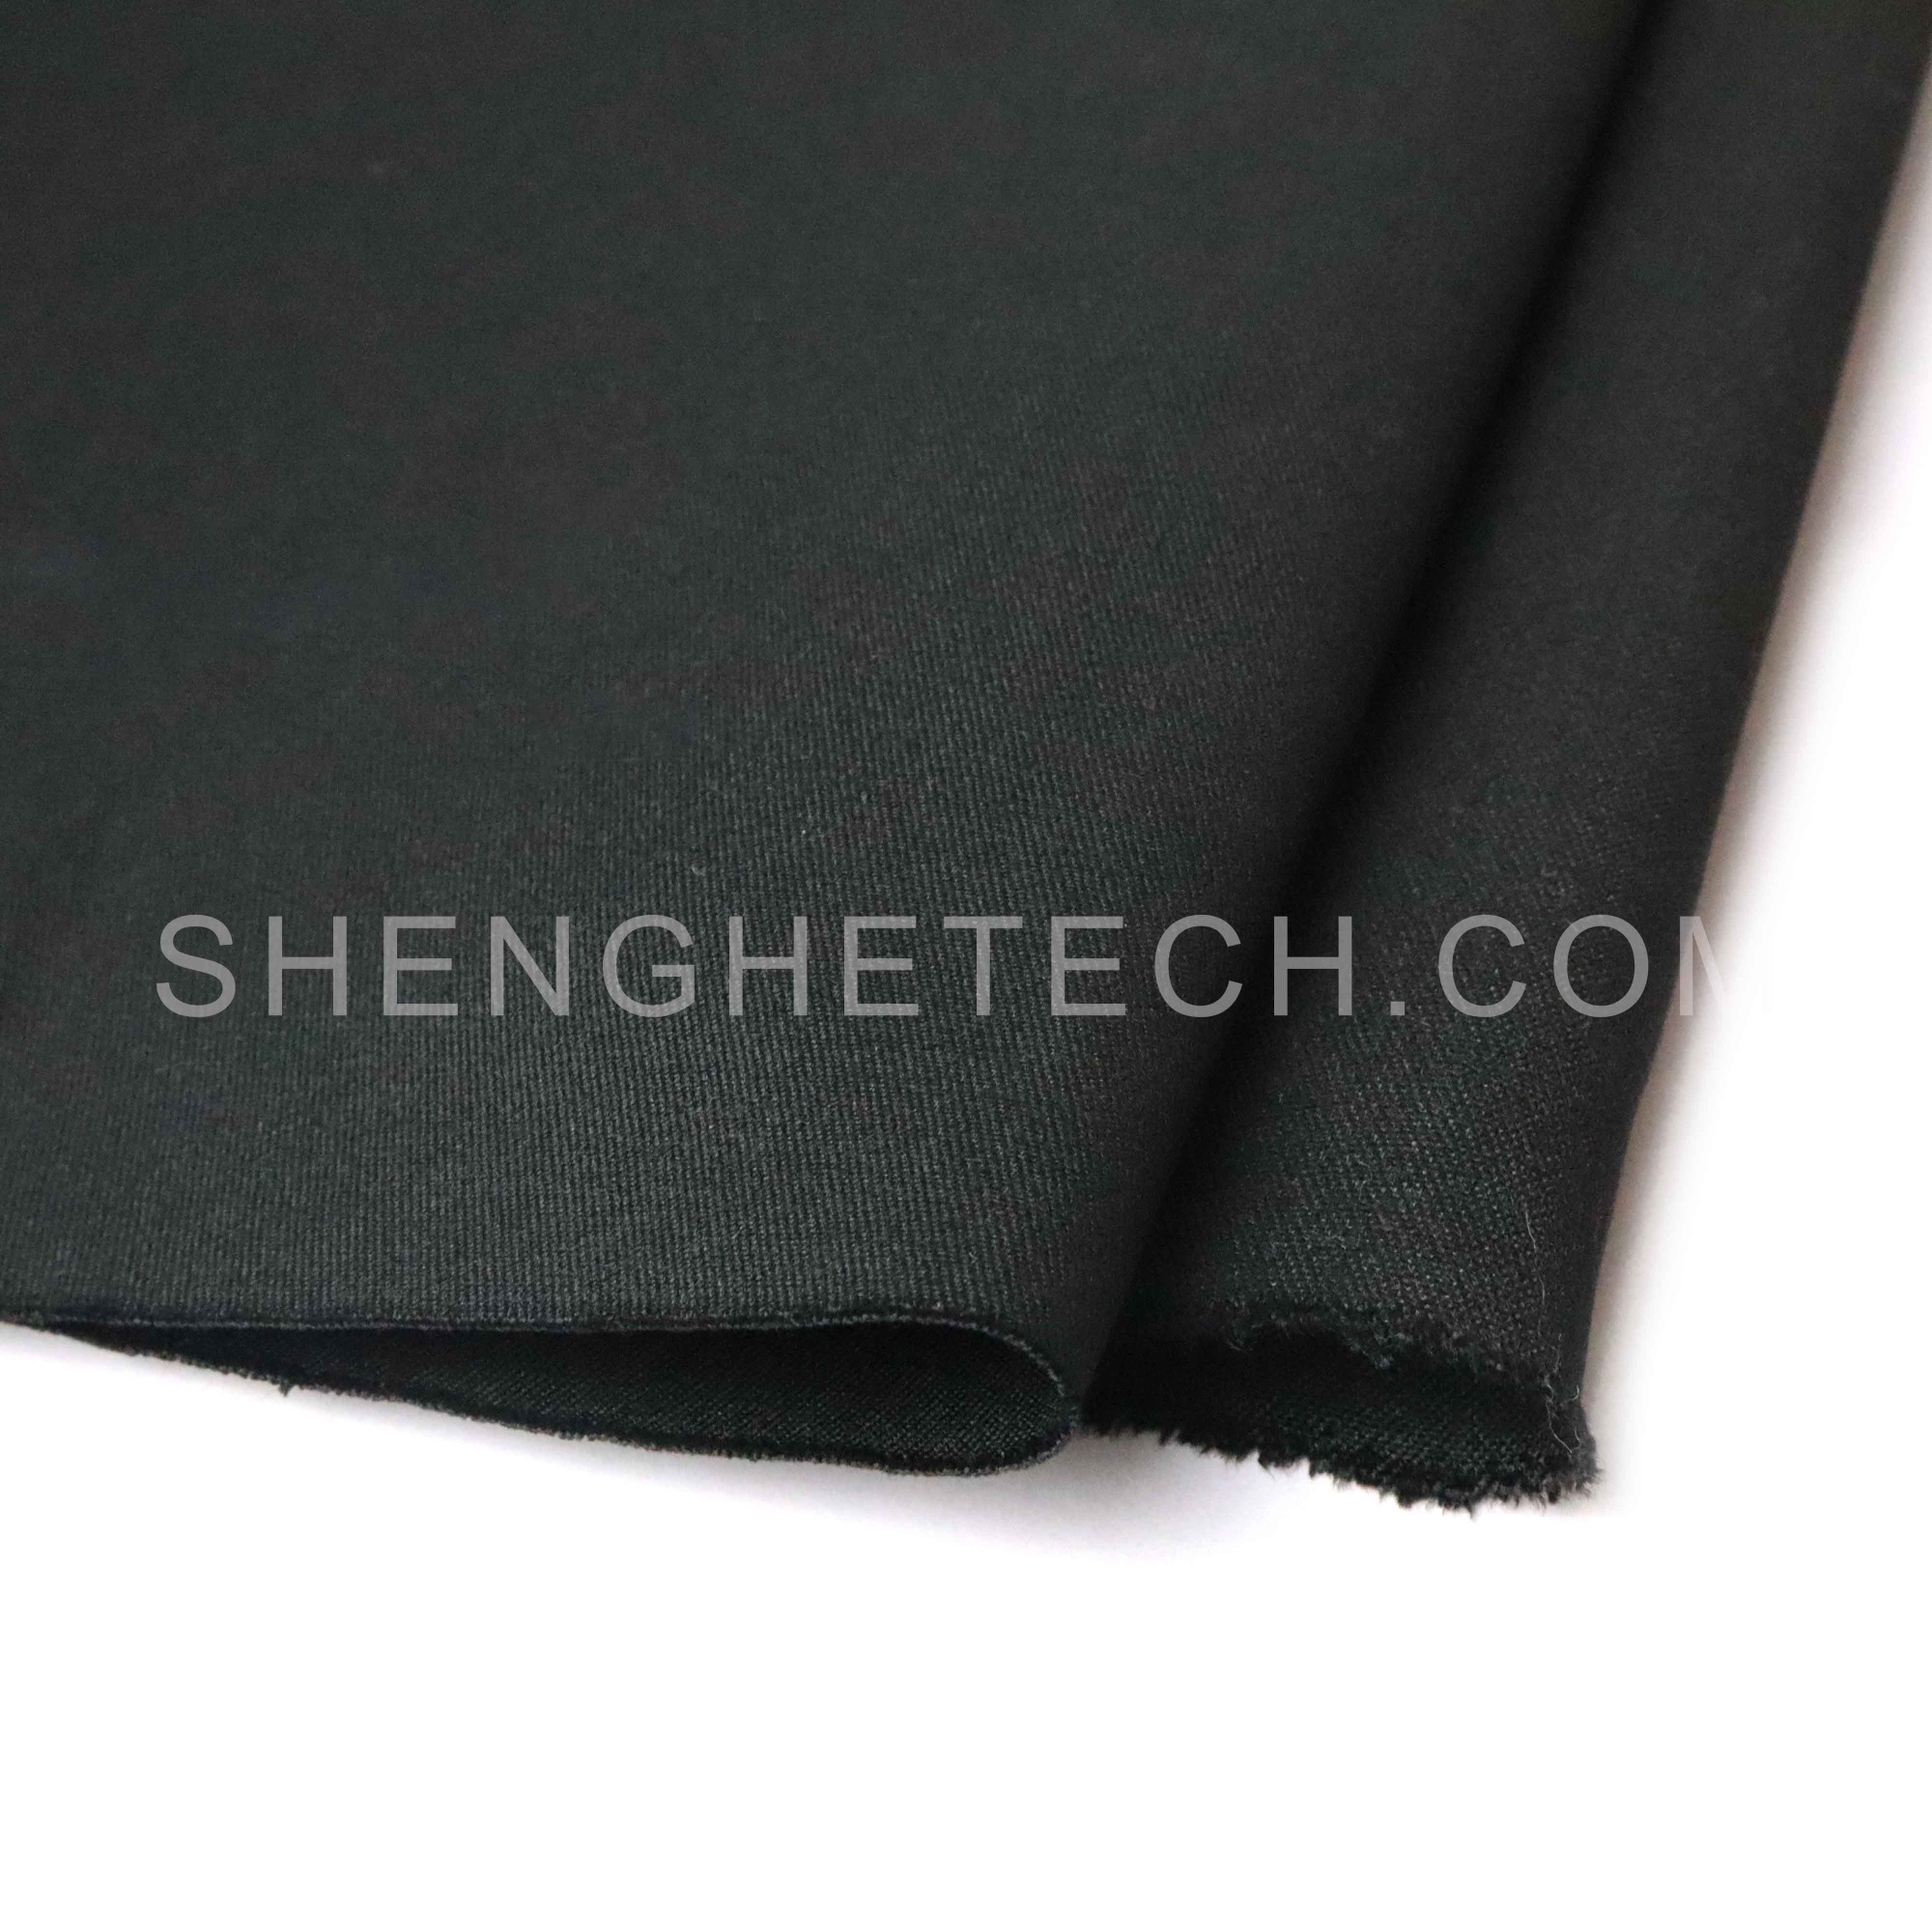 Pre-oxidized pan fabric